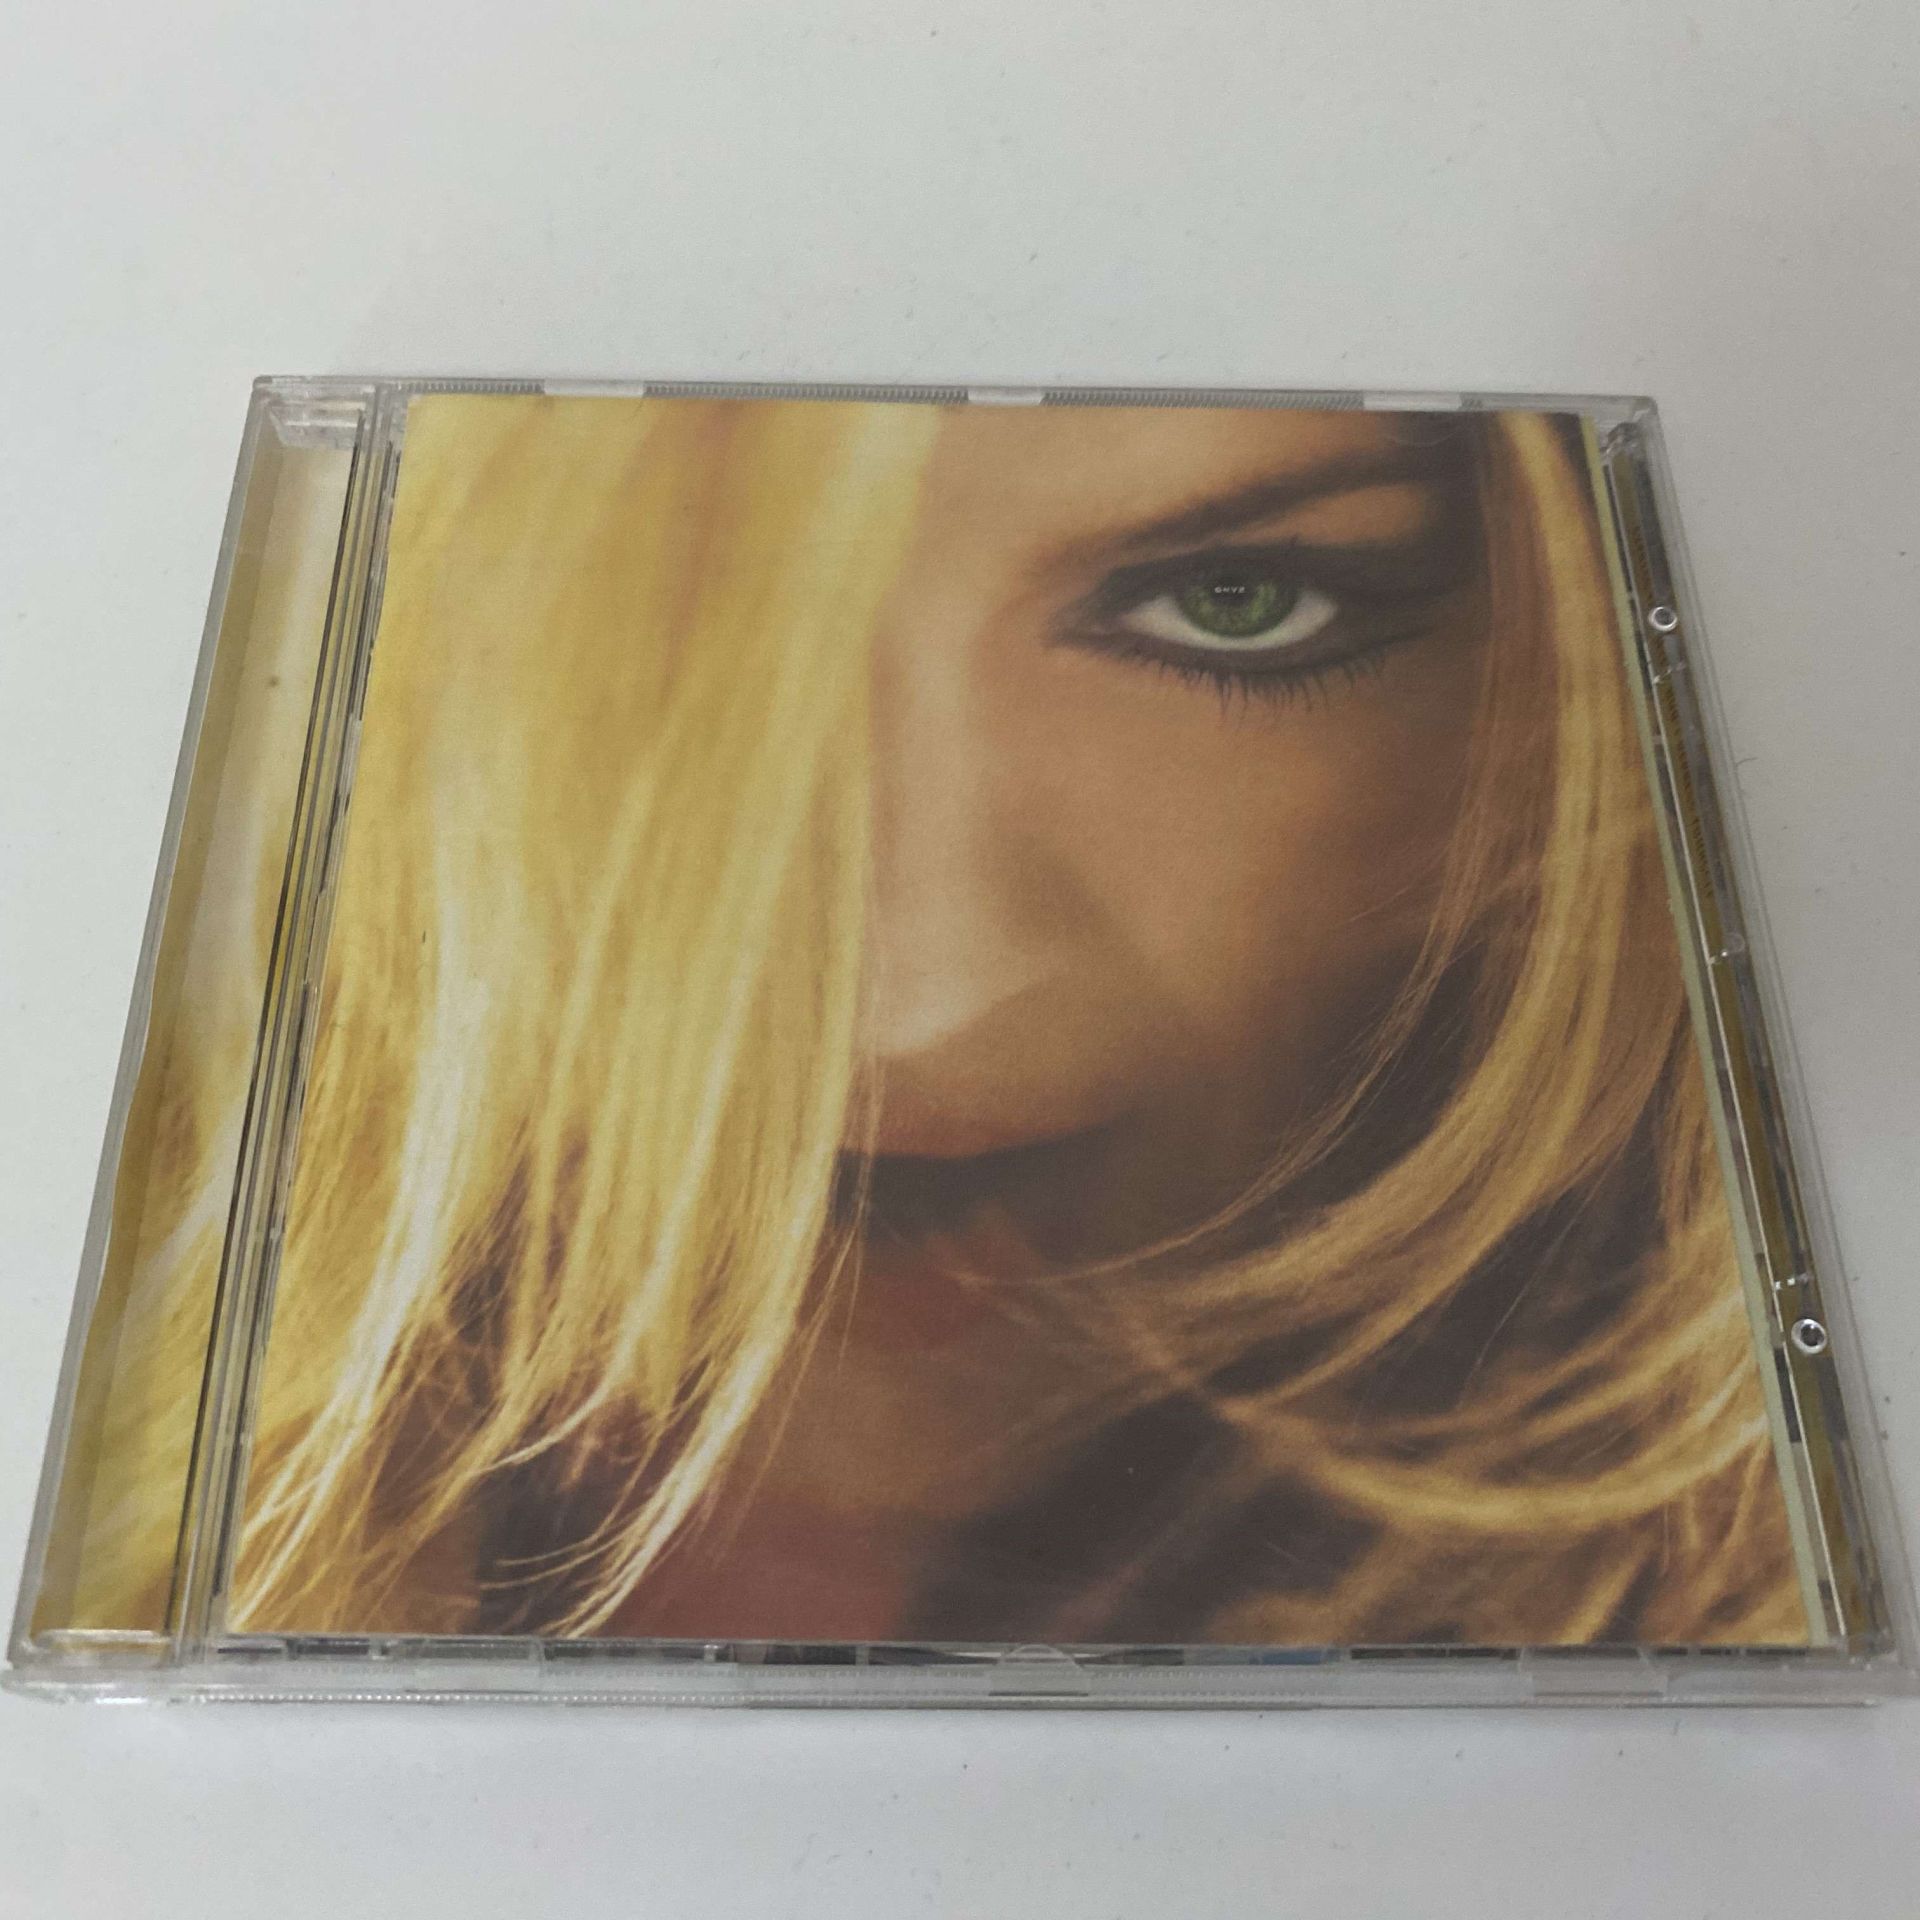 Madonna – GHV2 (Greatest Hits Volume 2)